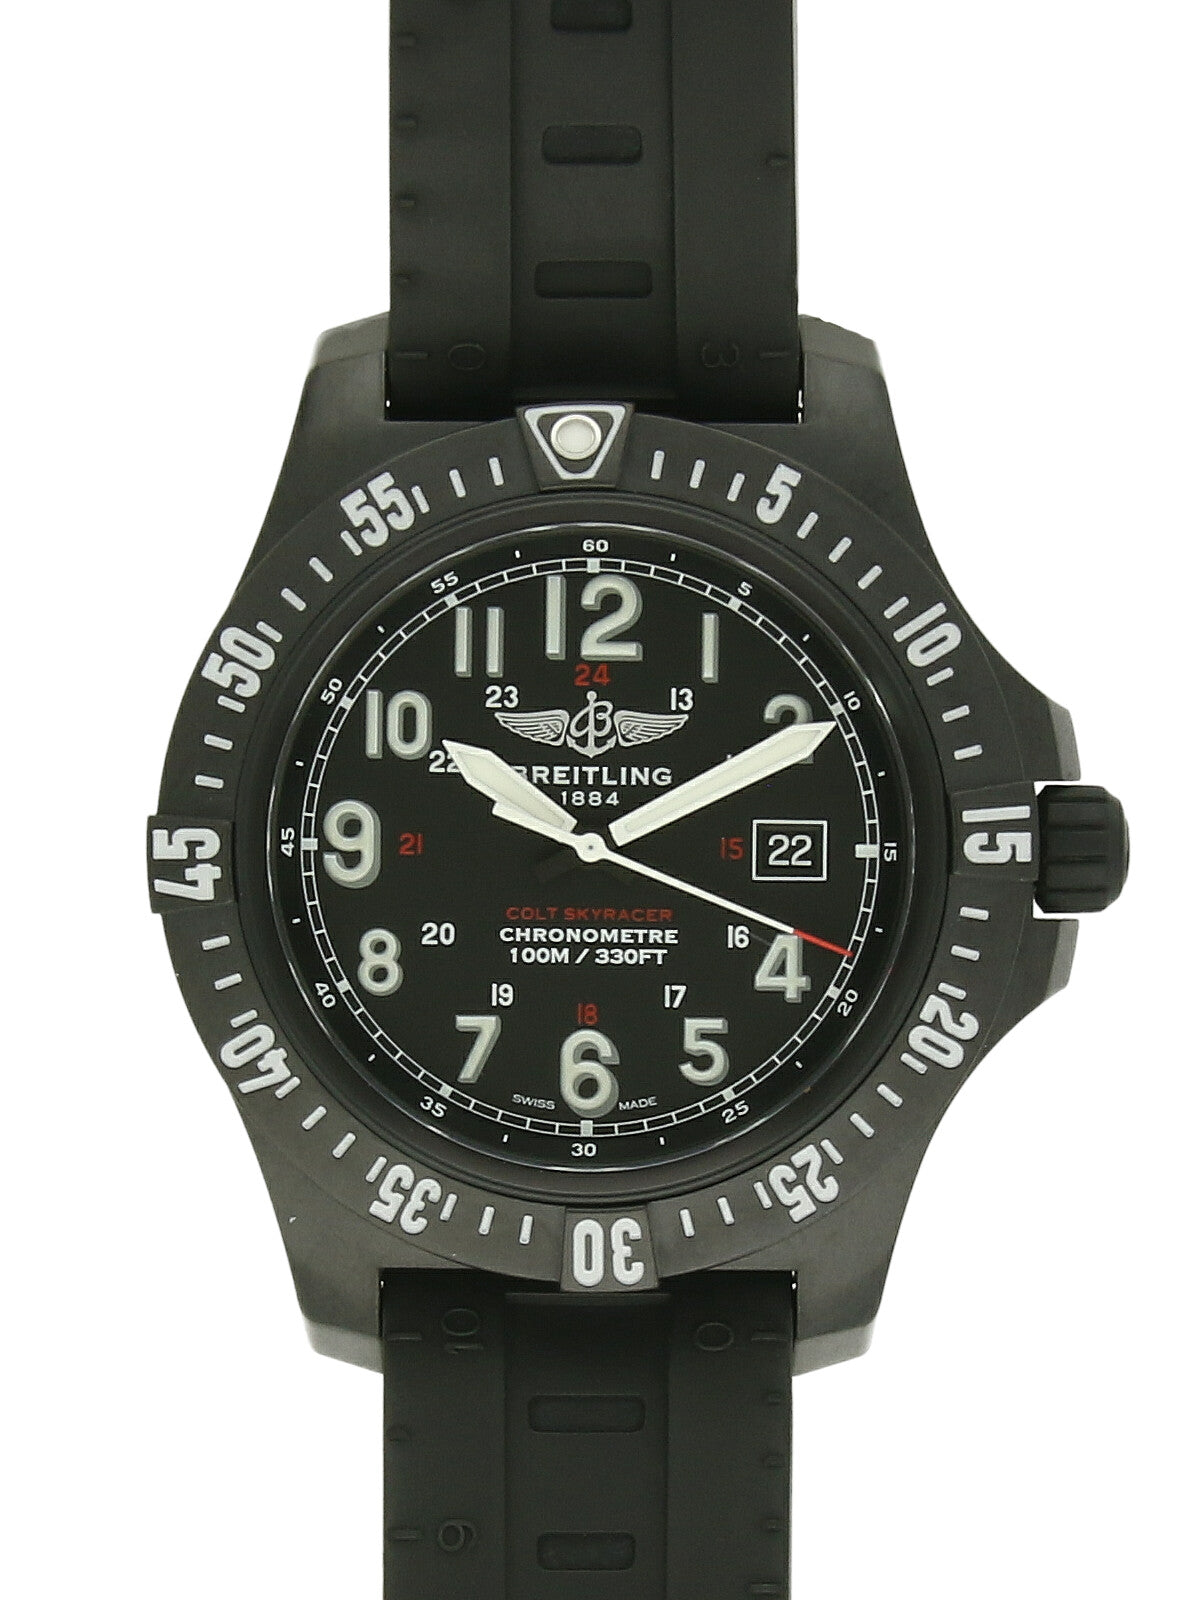 Pre Owned Breitling Colt Skyracer Breitlight Quartz 45mm Watch on Black Rubber Strap